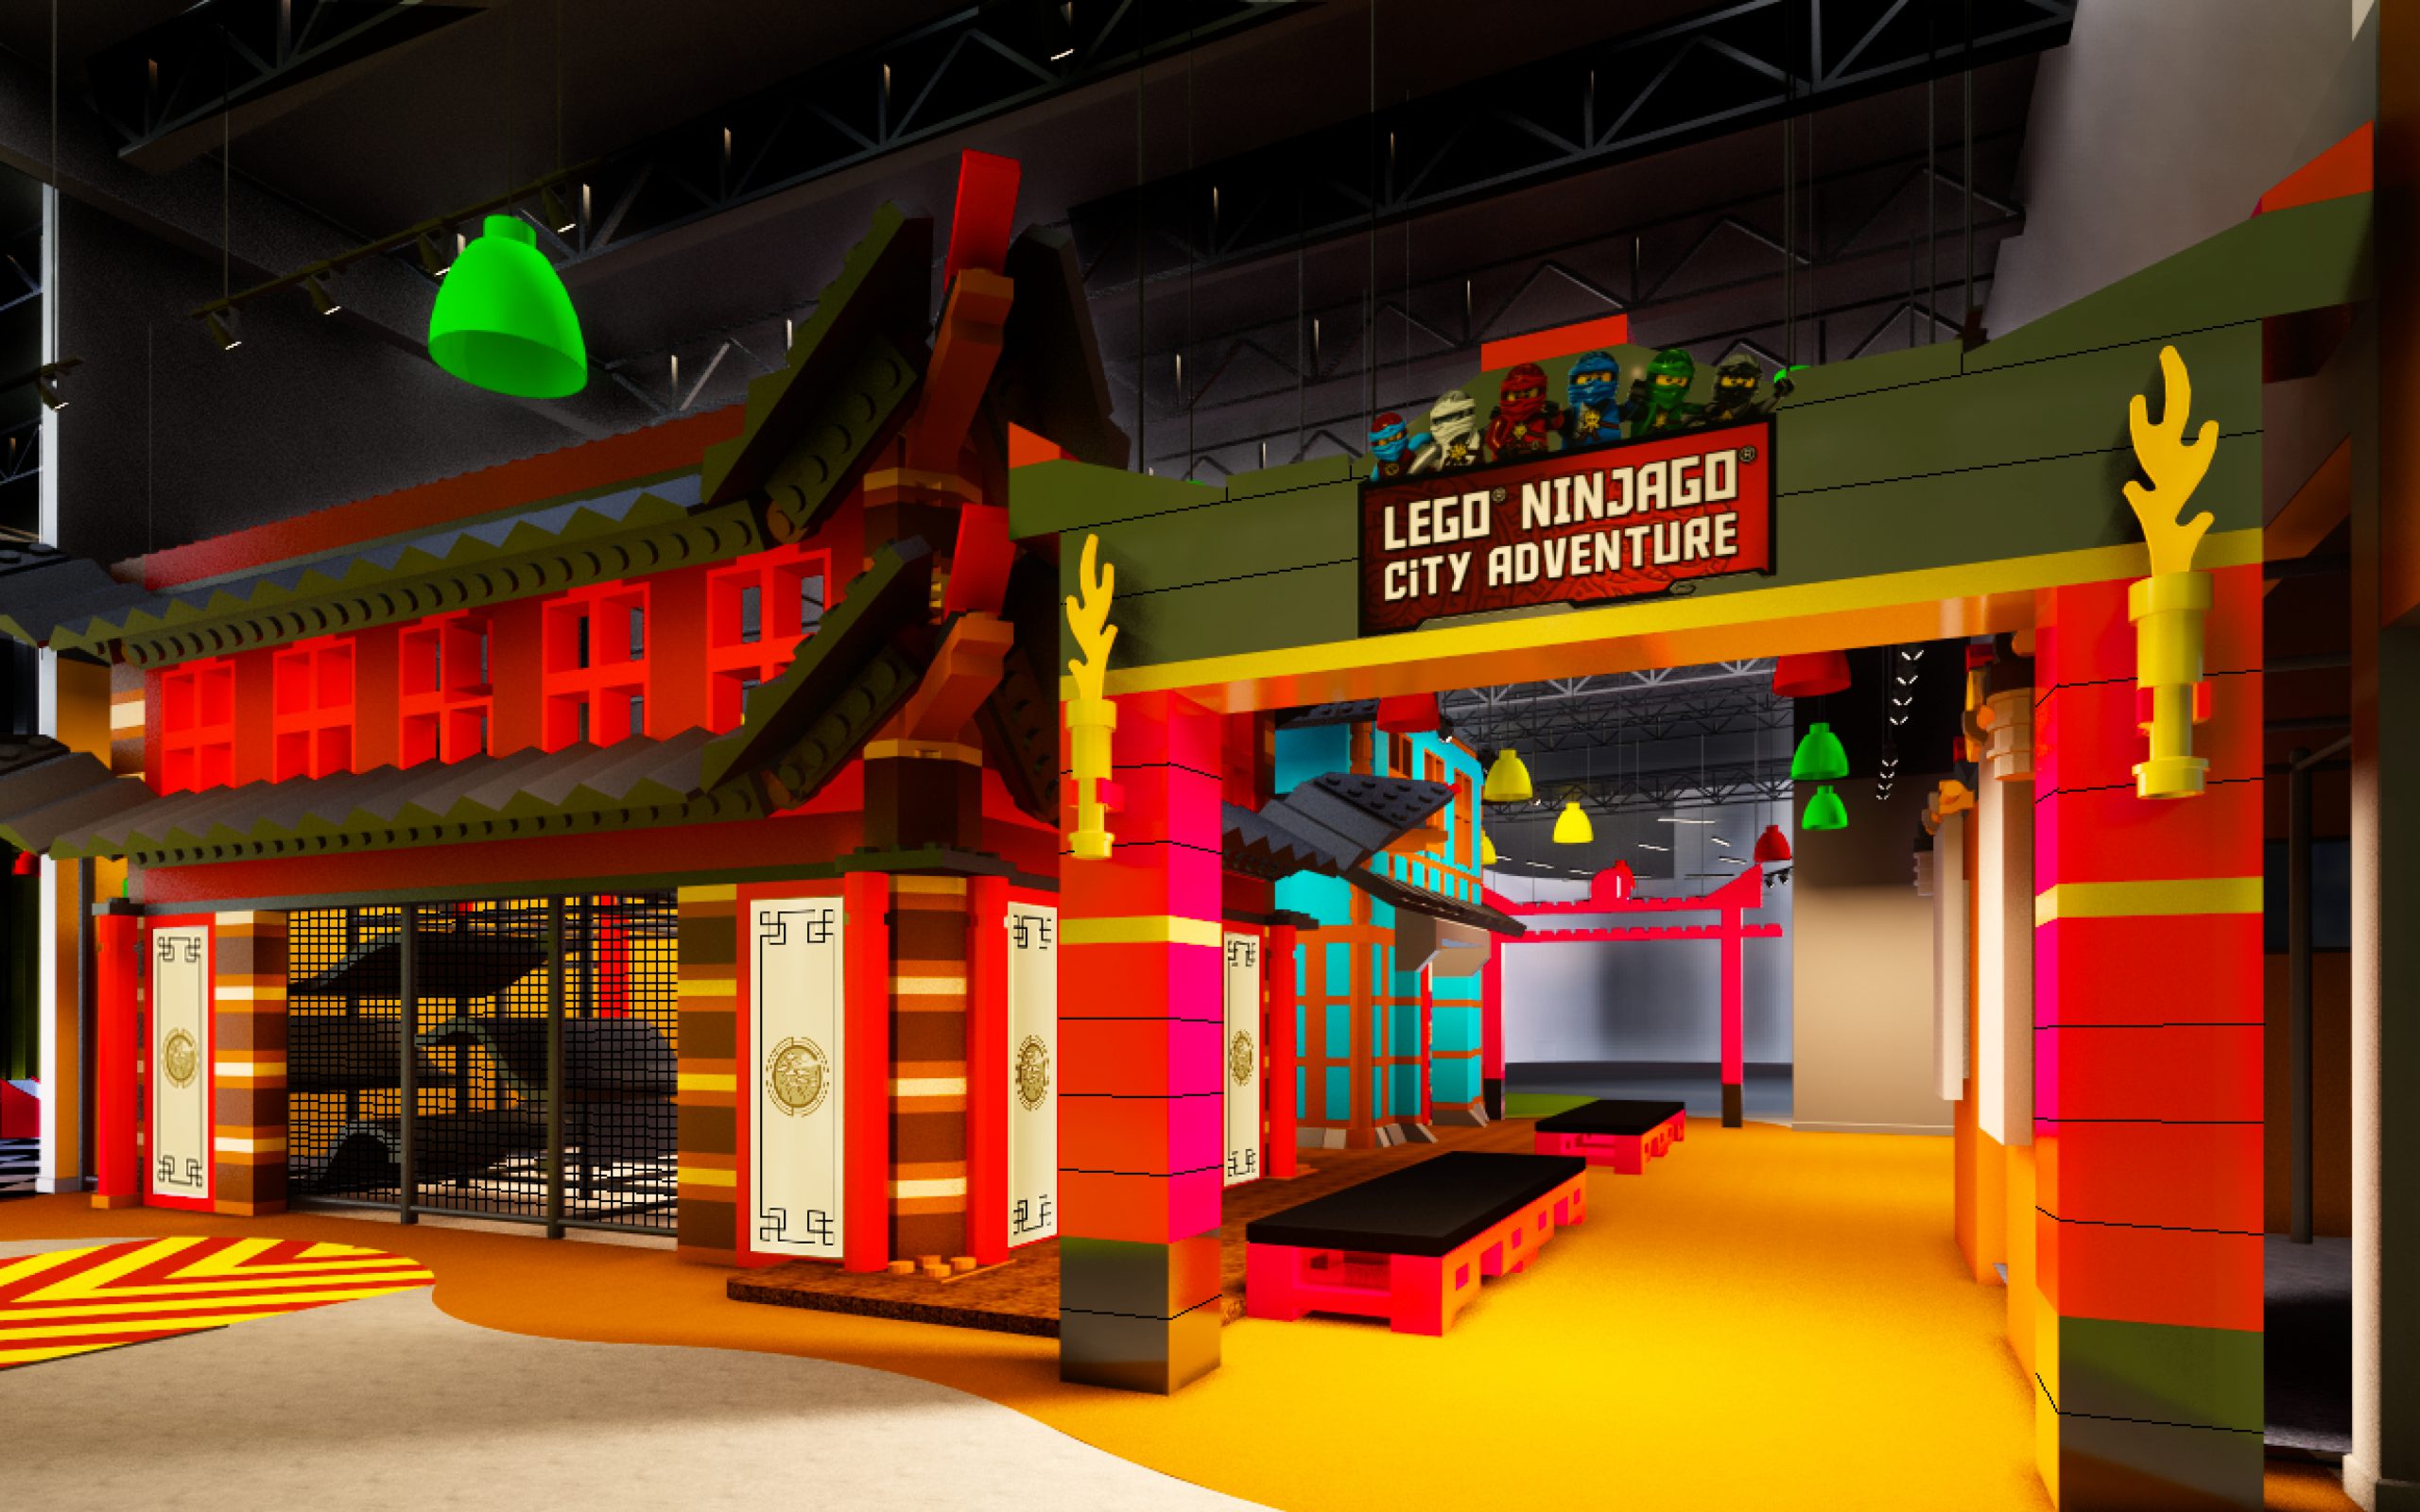 LEGO Ninjago themed play area